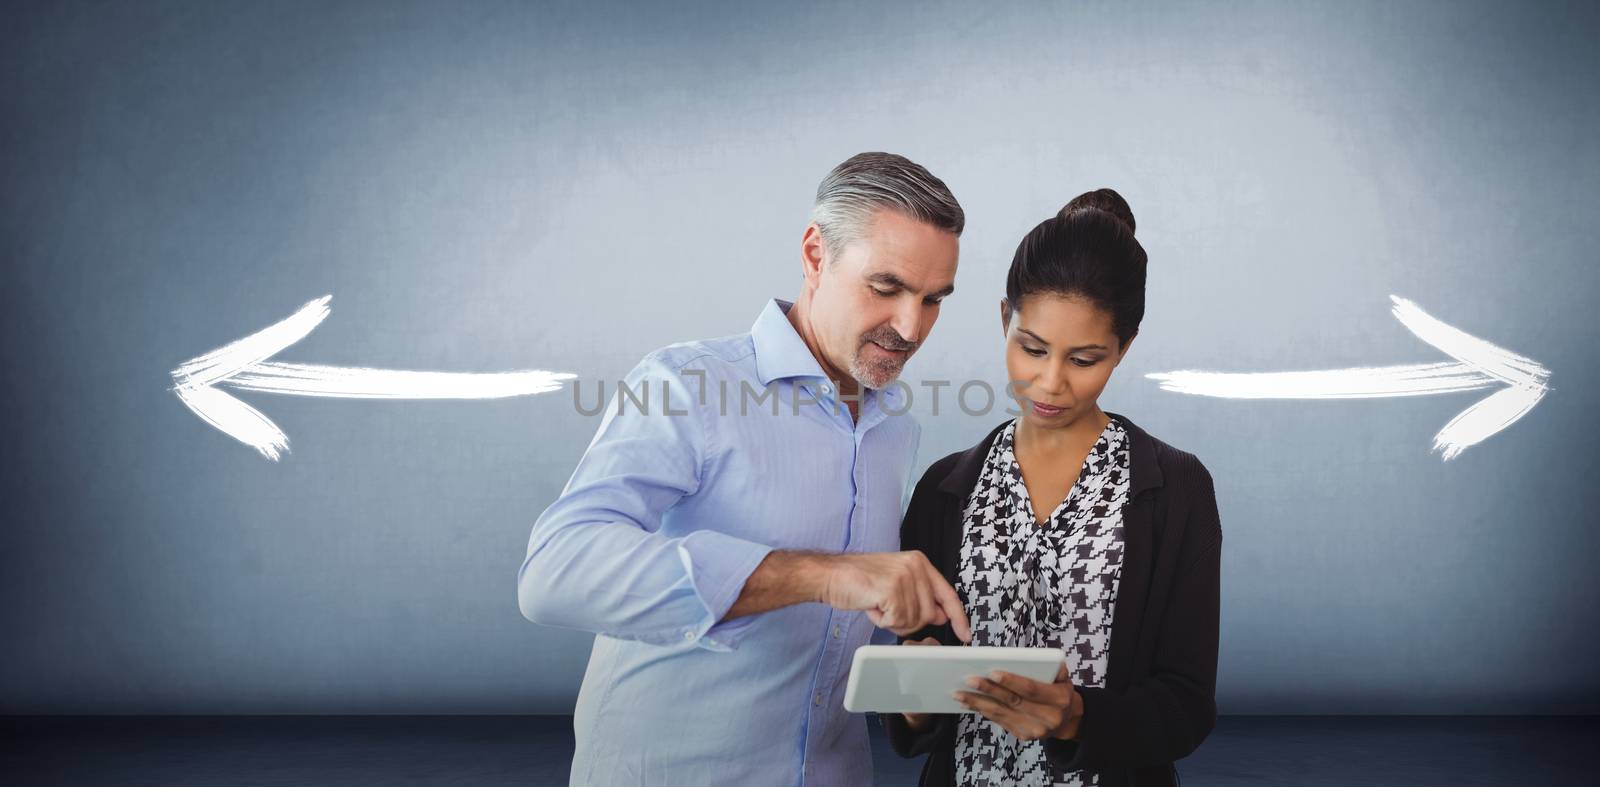 Portrait of business people using digital tablet  against grey room